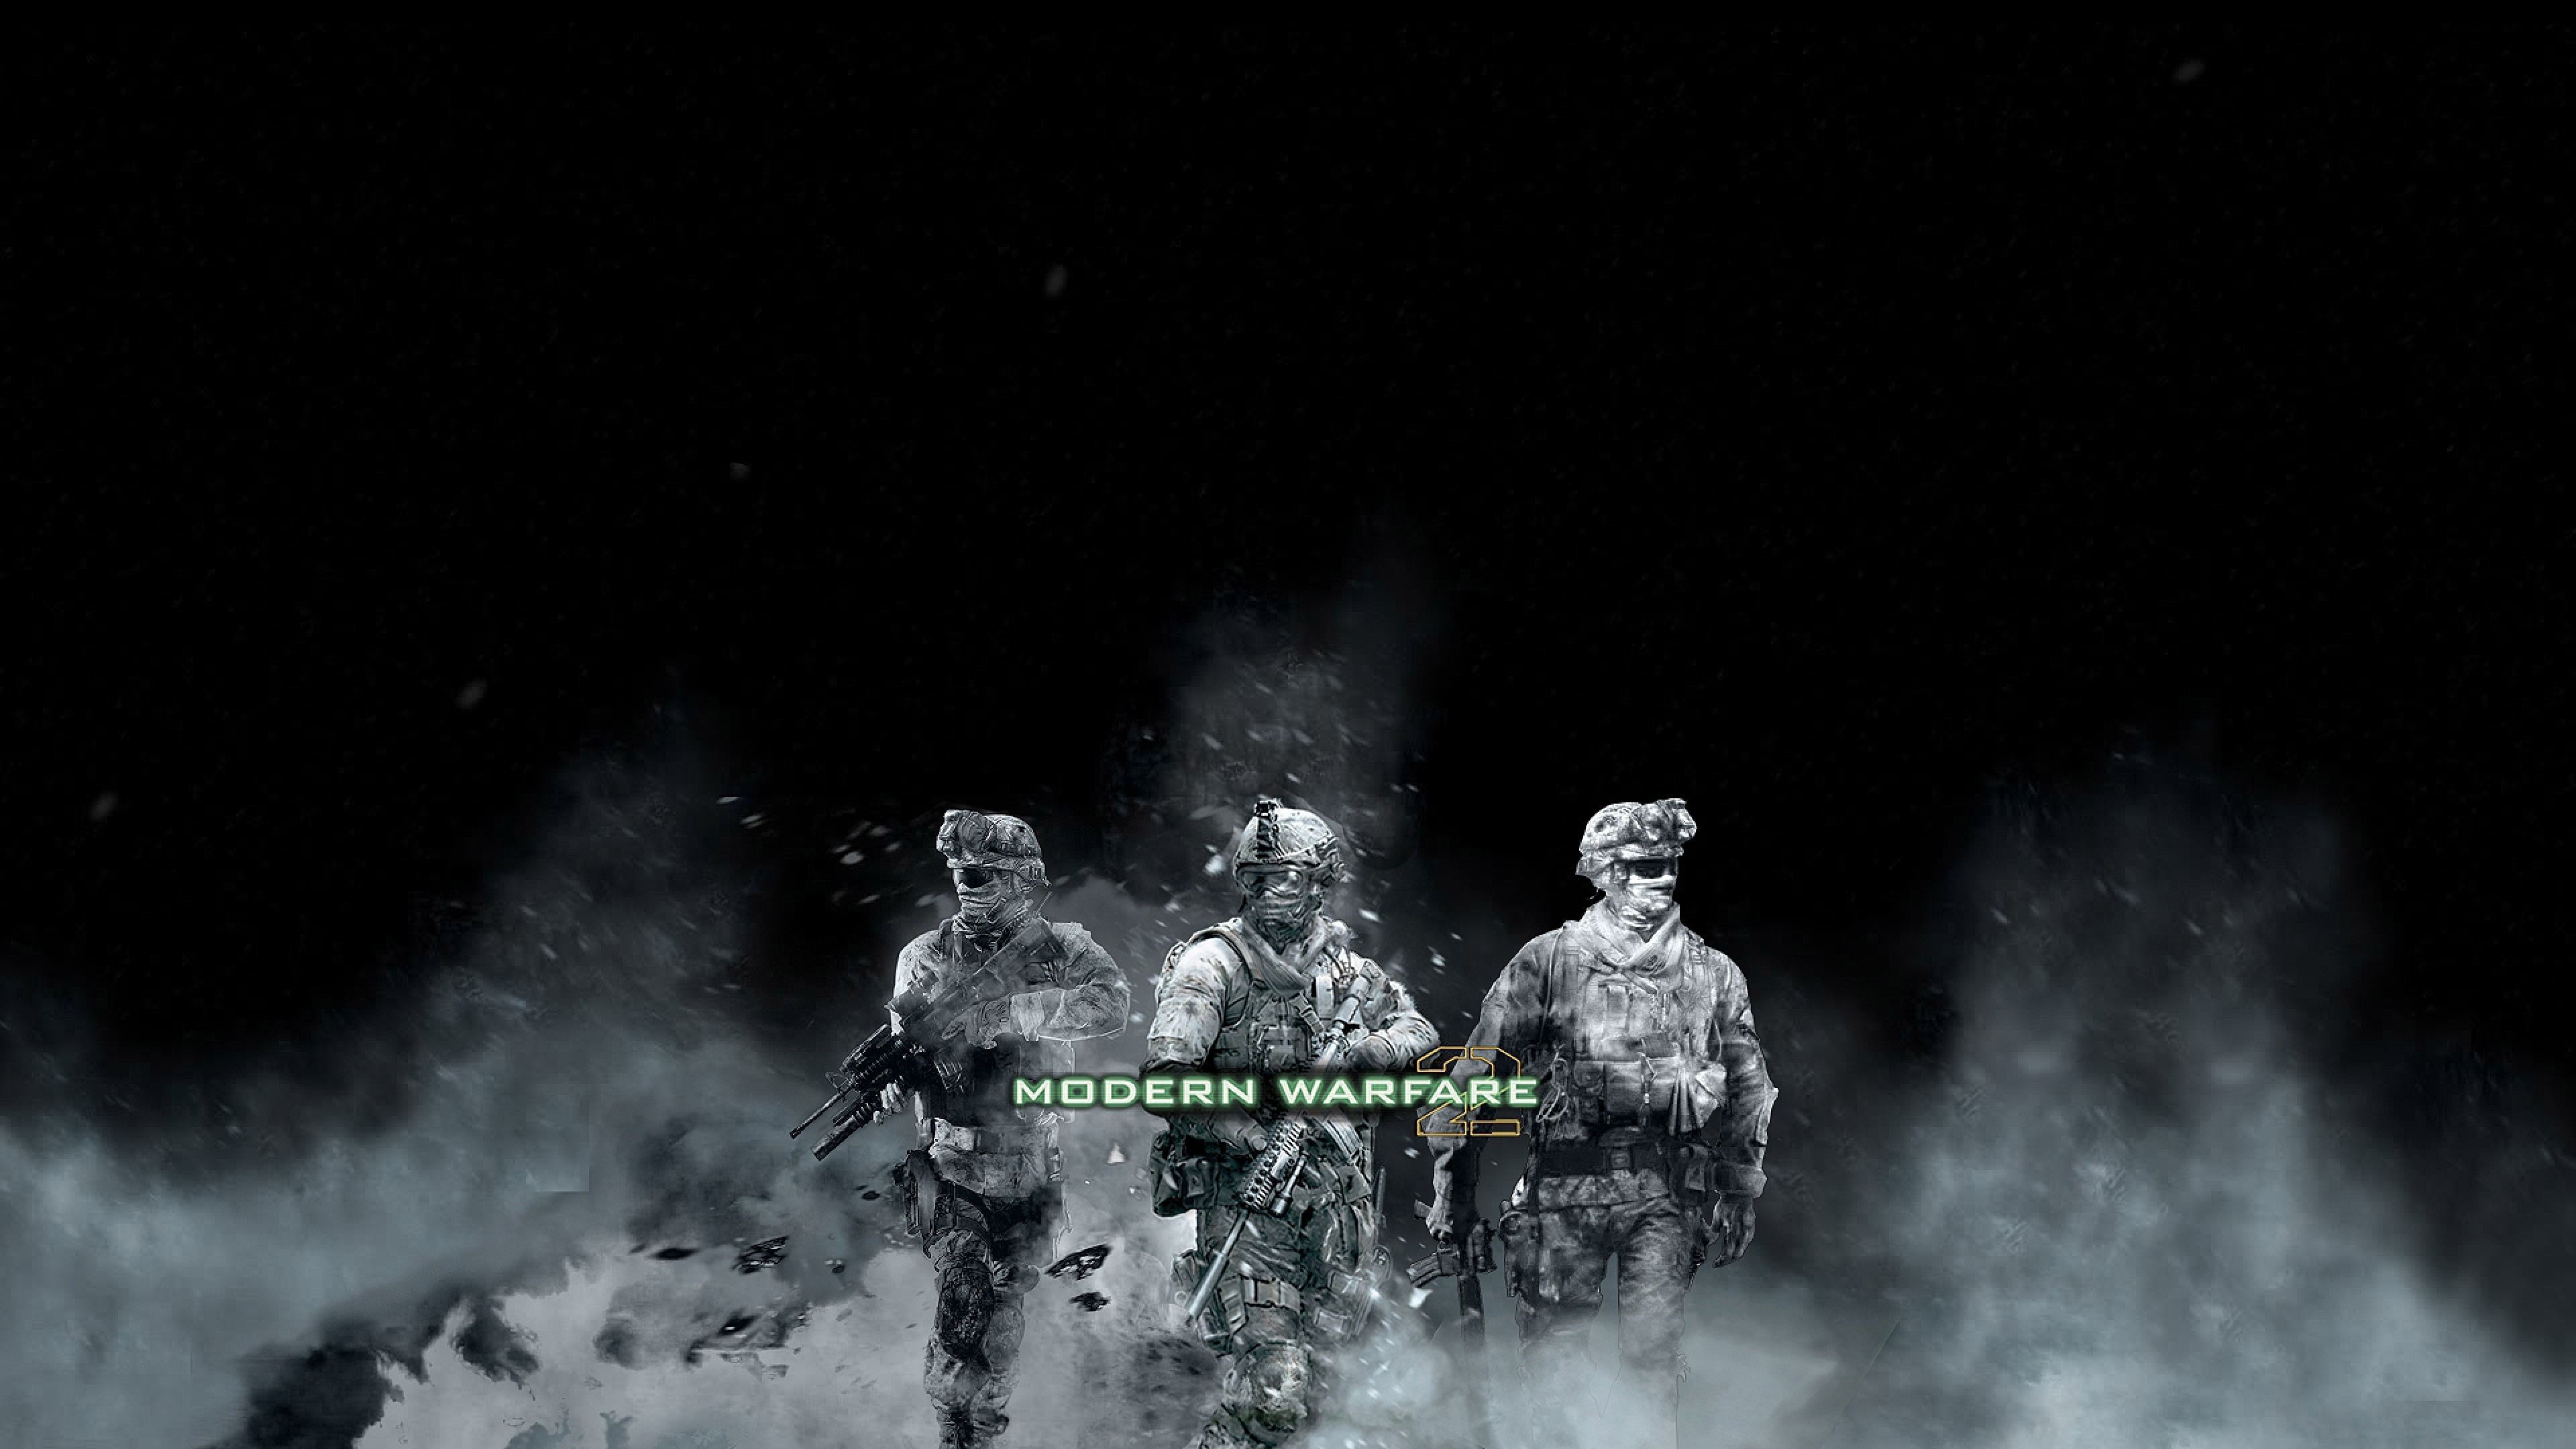 Download Wallpaper 3840x2160 Call of duty modern warfare 2